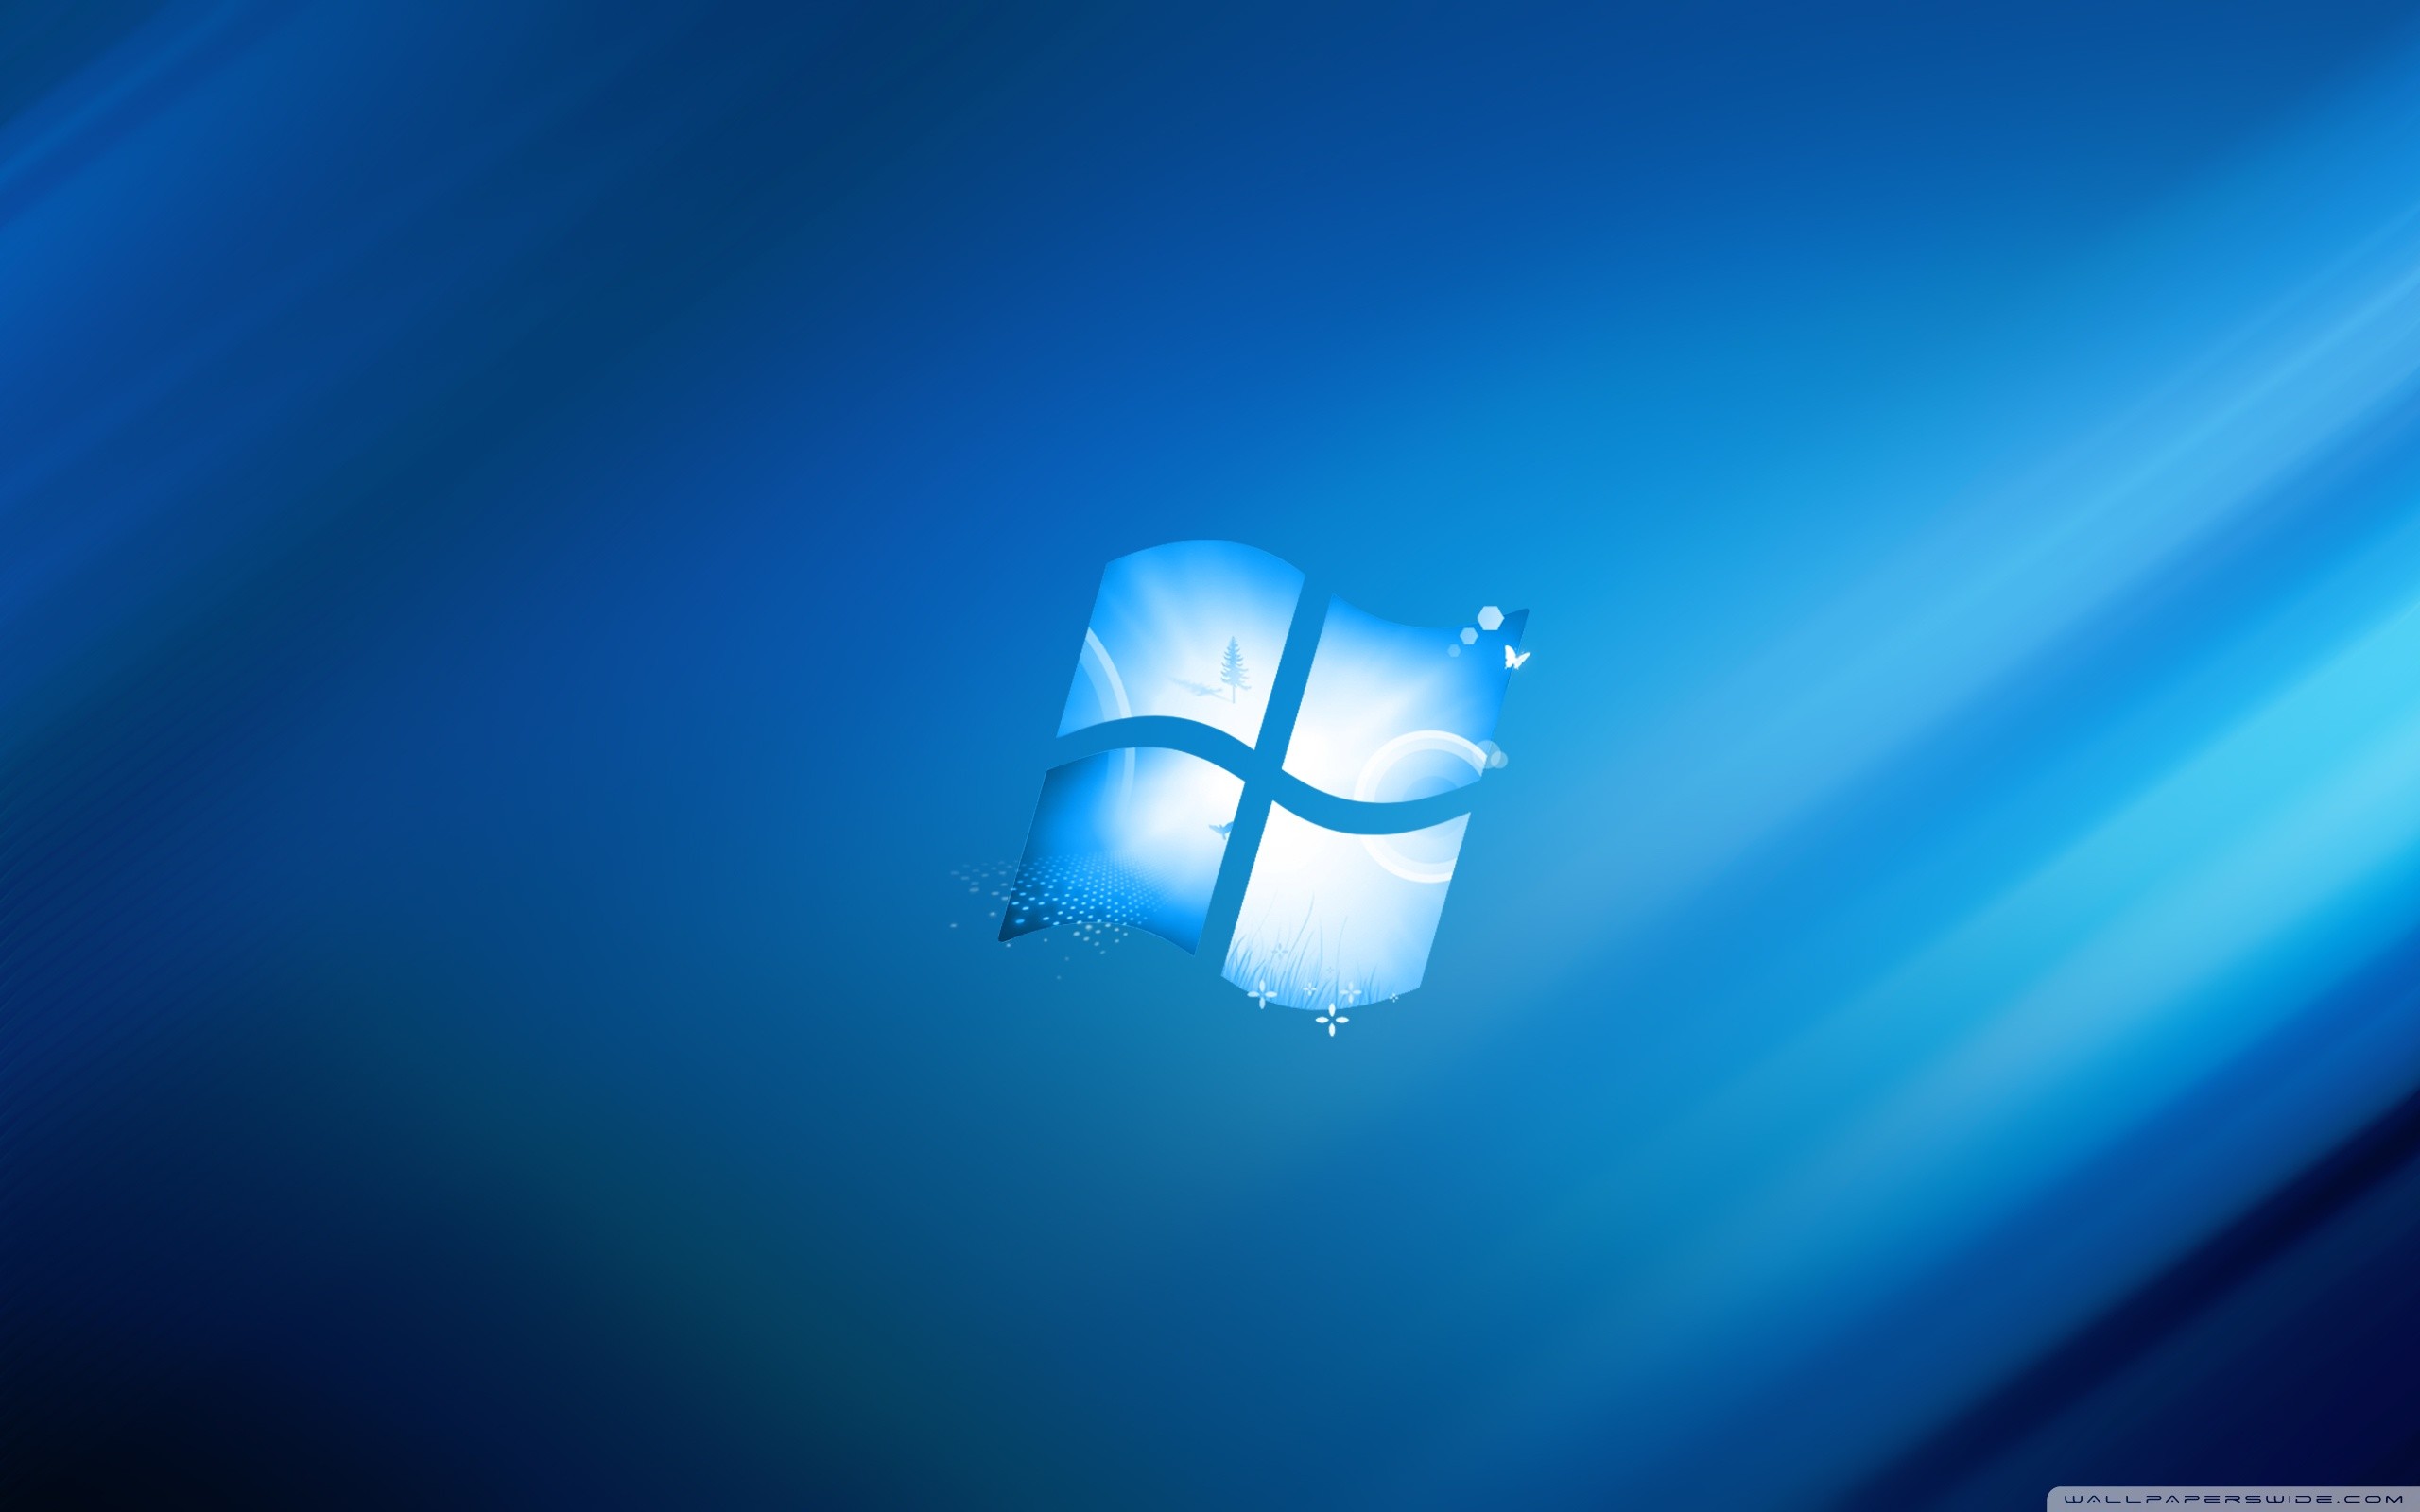 Desktop Backgrounds HD For Windows